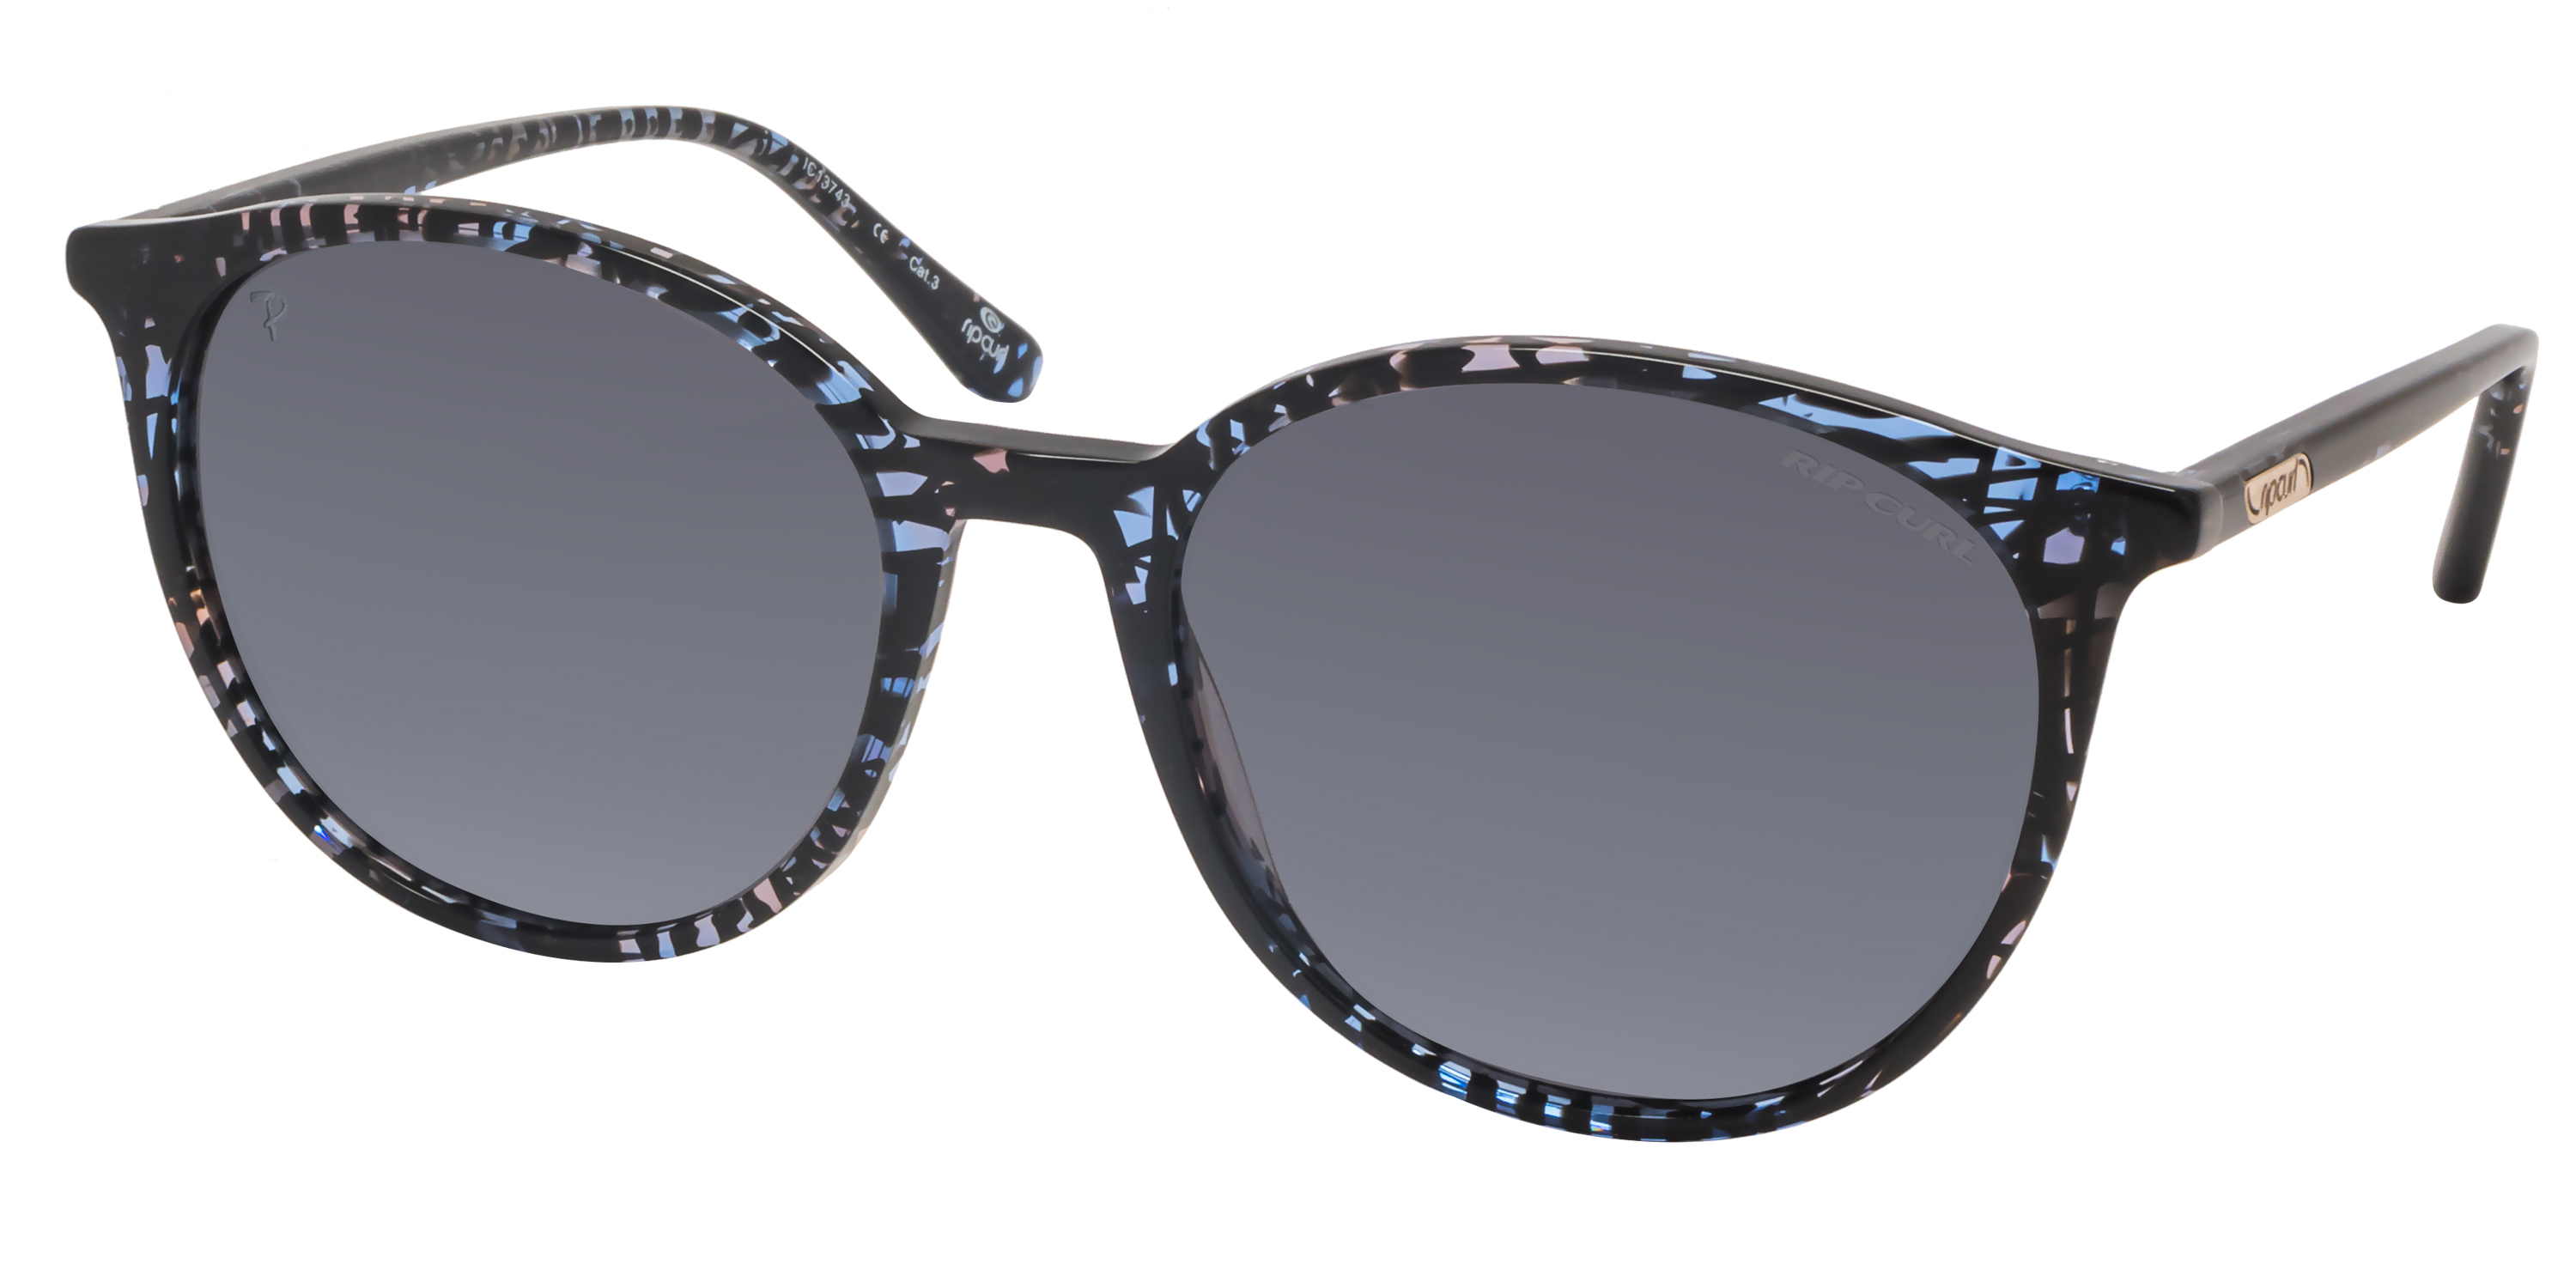 Lunettes de natation lunettes de natation optiques correctrices avec  protection UV anti-buée (taille : -350°) Fournitures de natation